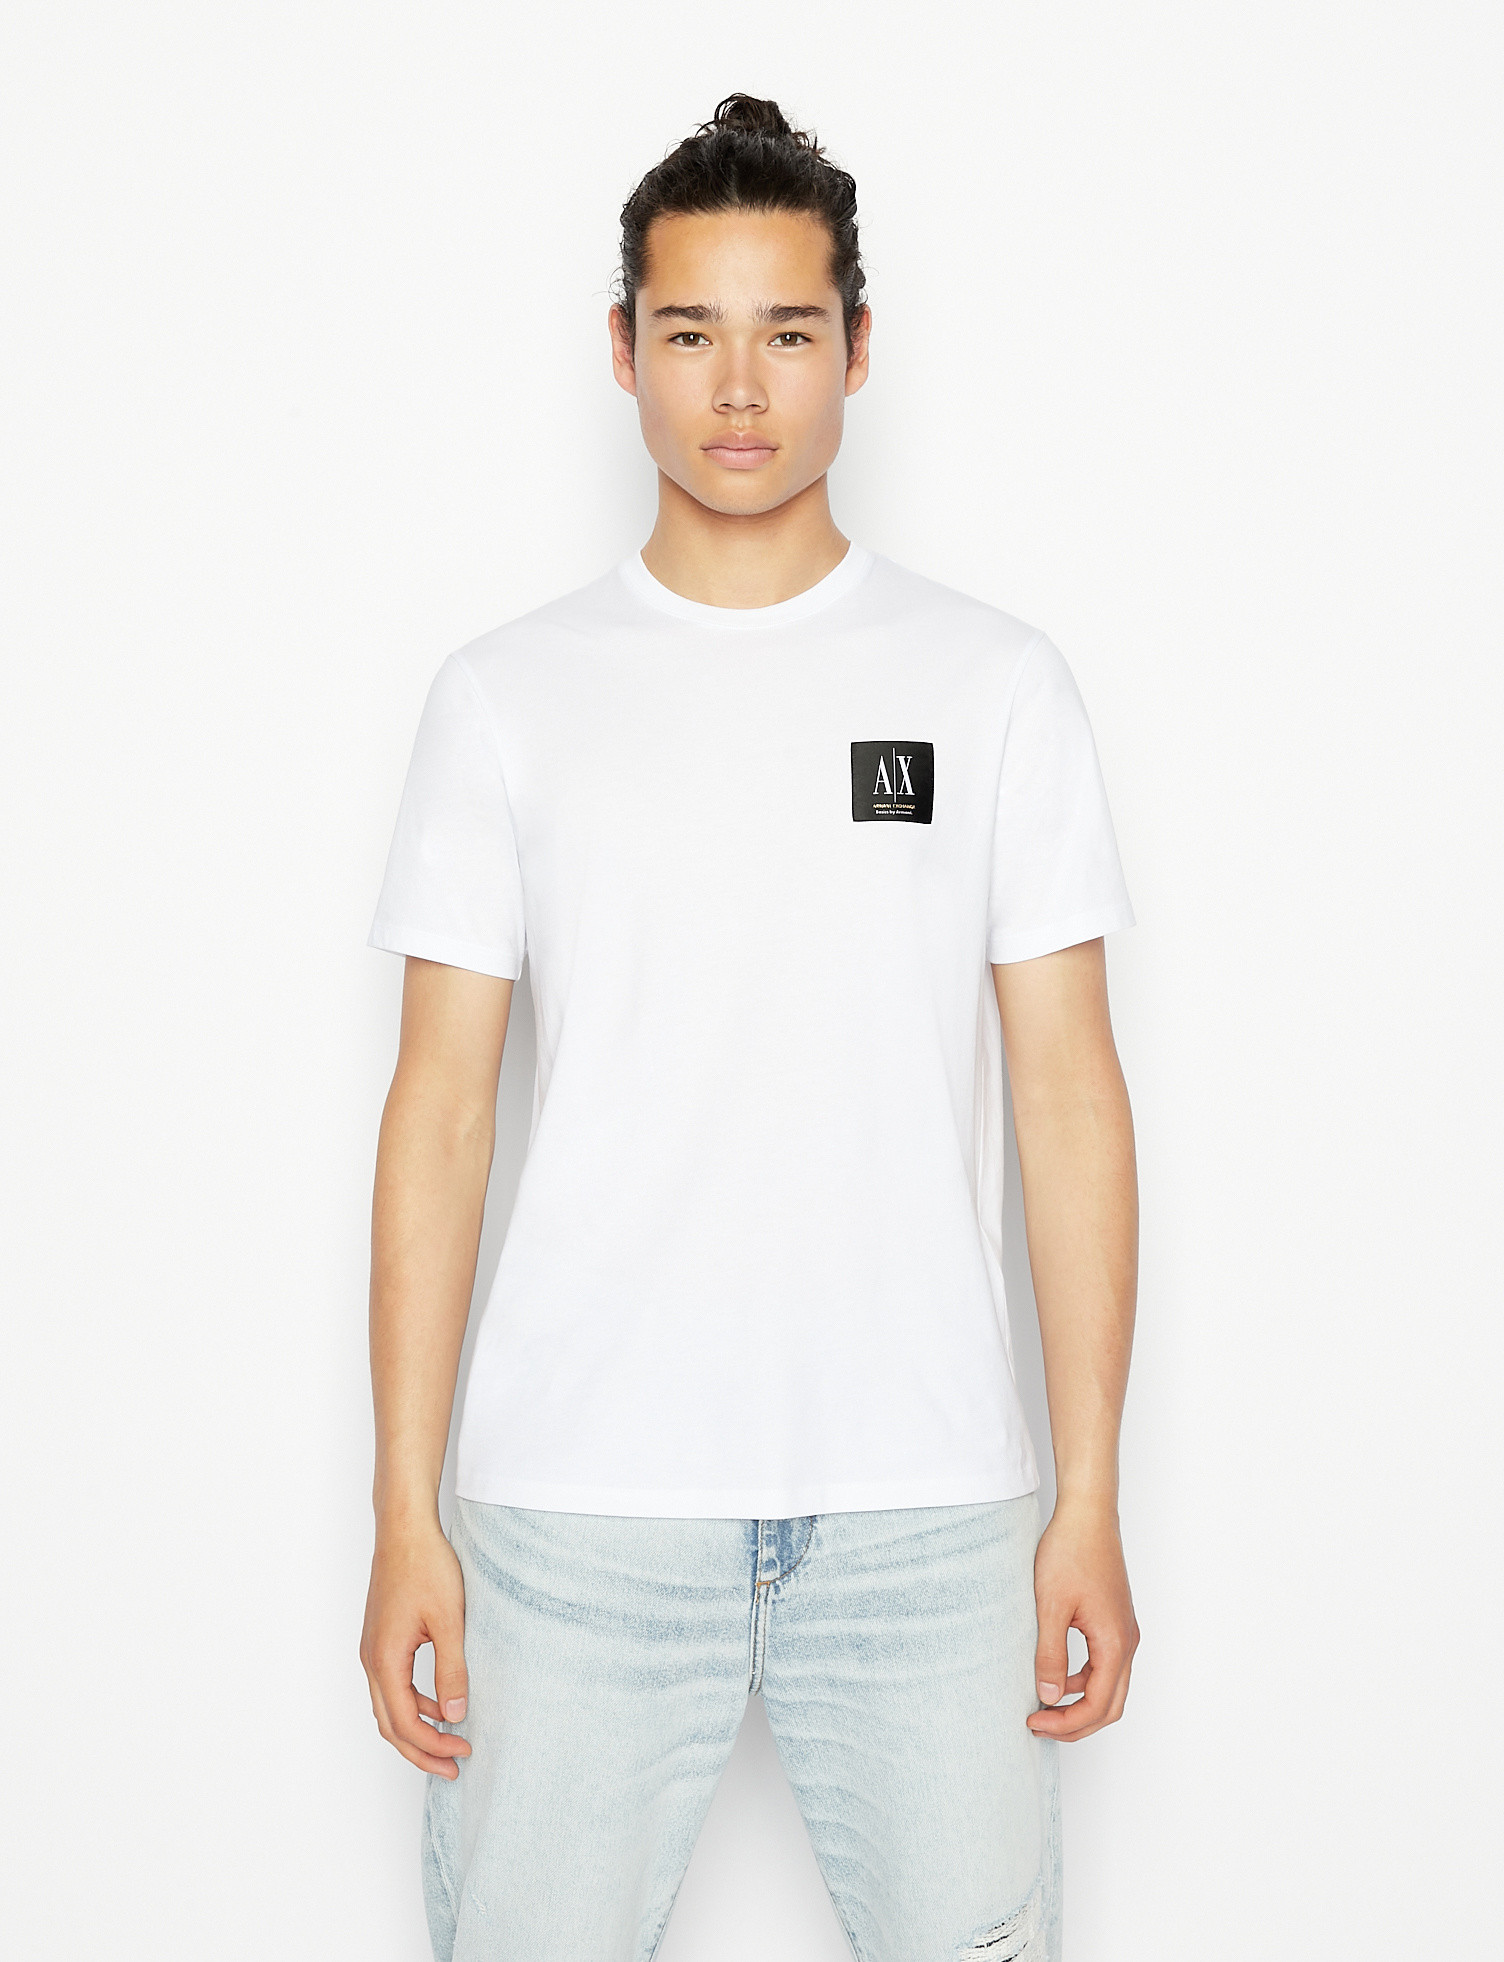 Armani Exchange - T-shirt regular fit in cotone organico con logo, Bianco, large image number 3